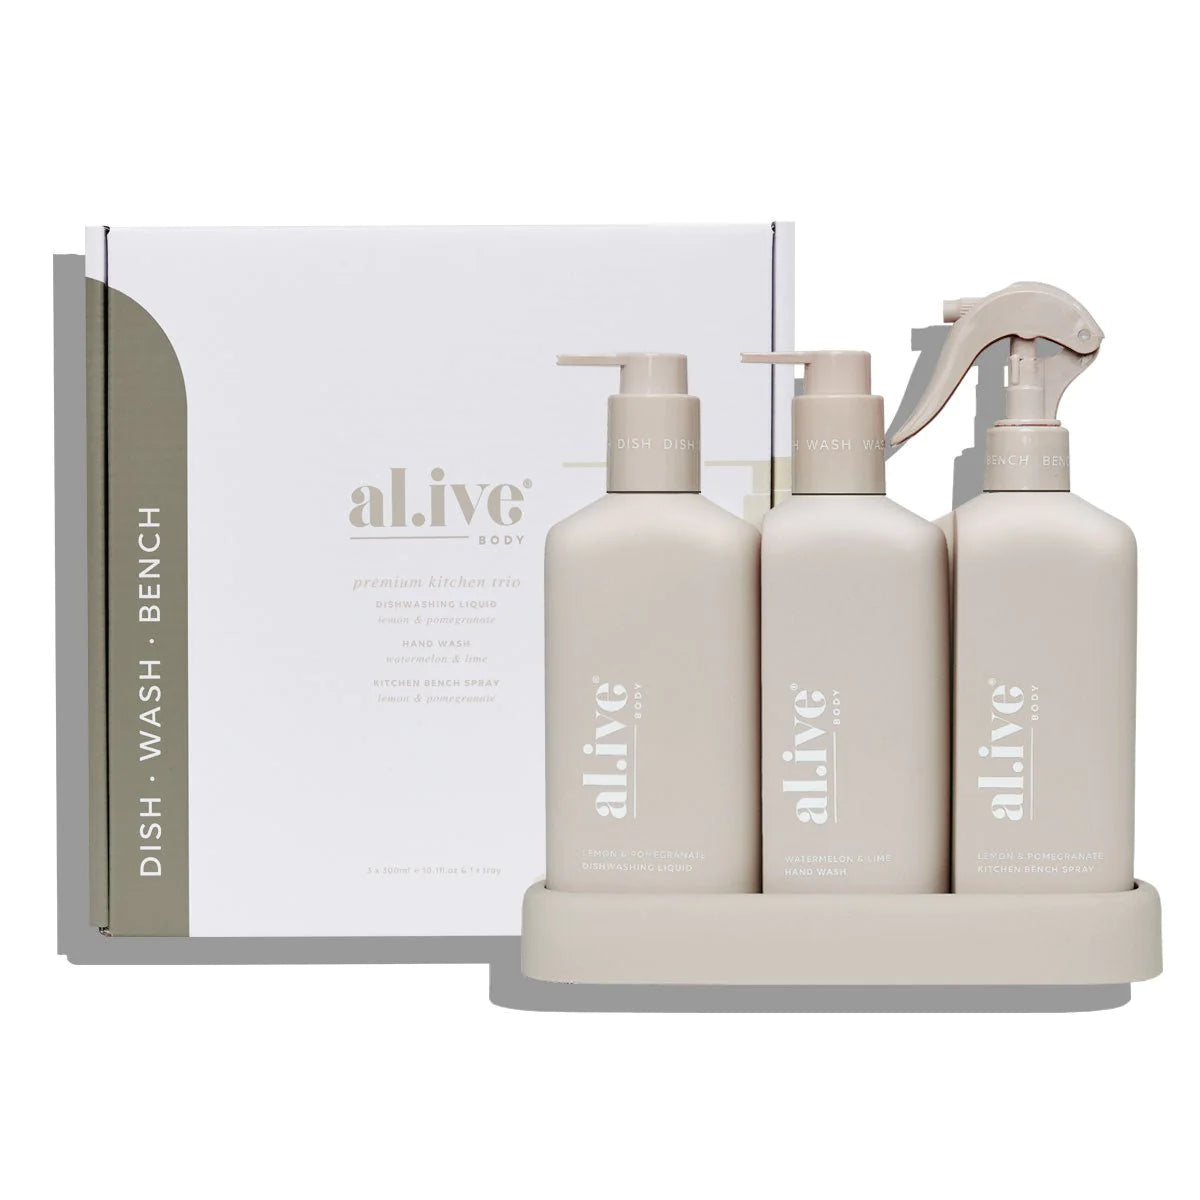 AL.IVE BODY | Dishwashing Liquid, Hand Wash & Bench Spray + Tray, Premium Kitchen Trio